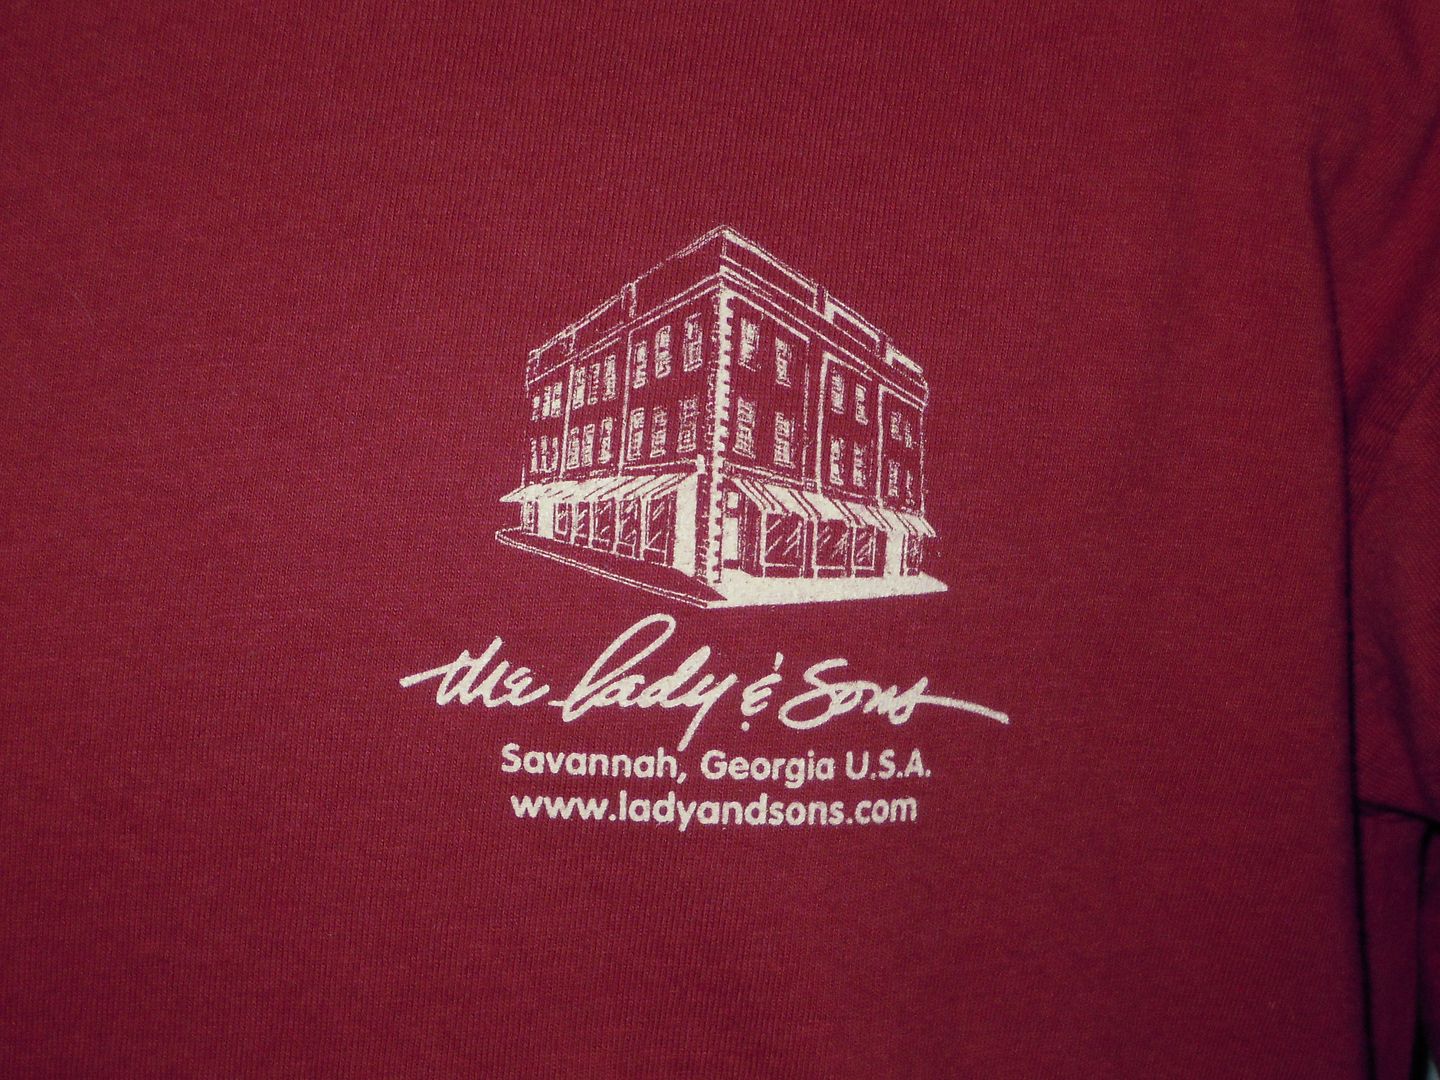 The Lady and Sons Paula Deen Restaurant Savannah Georgia T Shirt L Hey Ya'Ll